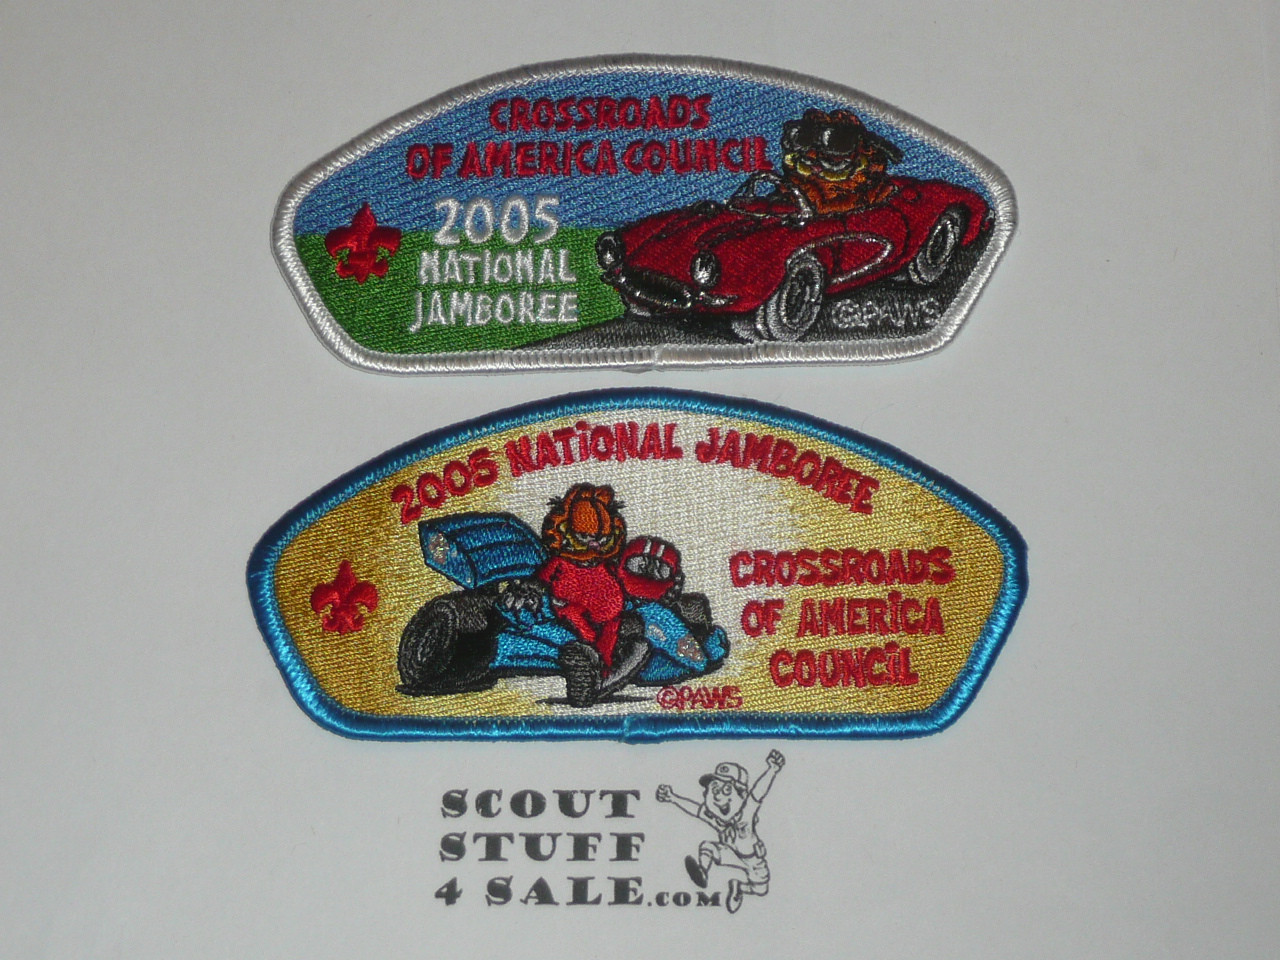 2005 National Jamboree JSP - Crossroads of America Council, 2 different